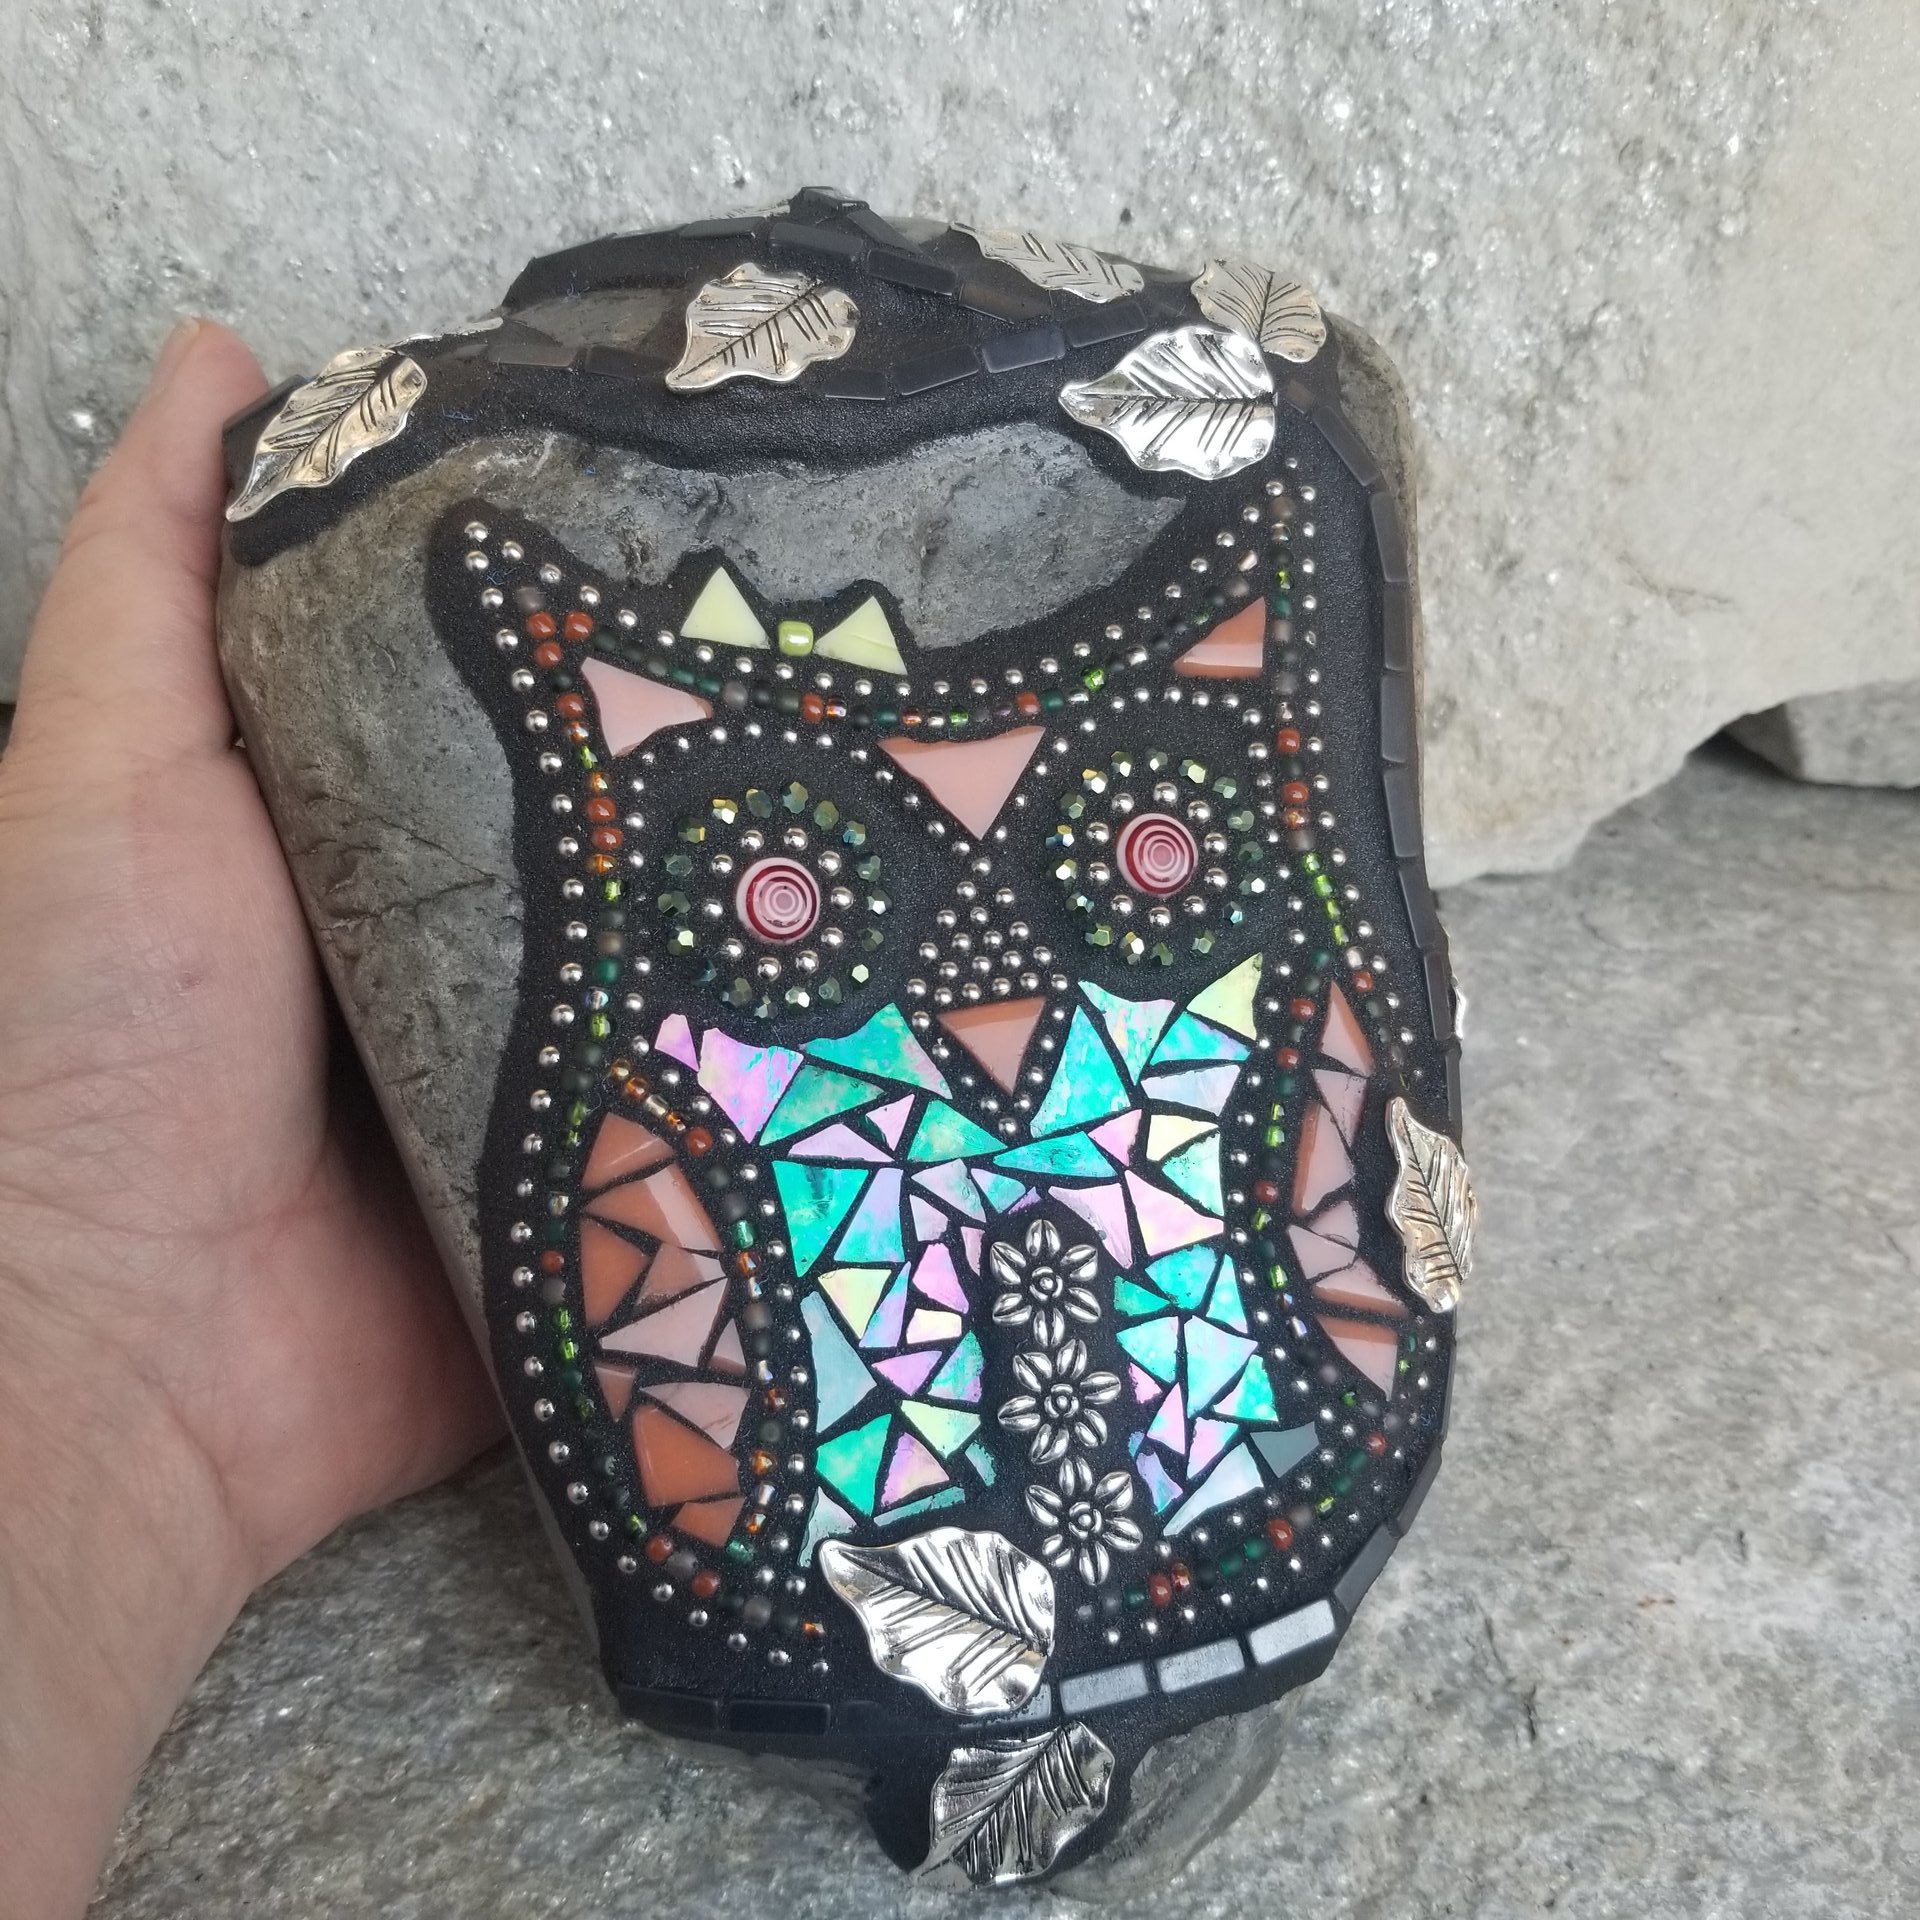 Owl Mosaic Garden Stone, Gardener Gift, Mosaic Art,  